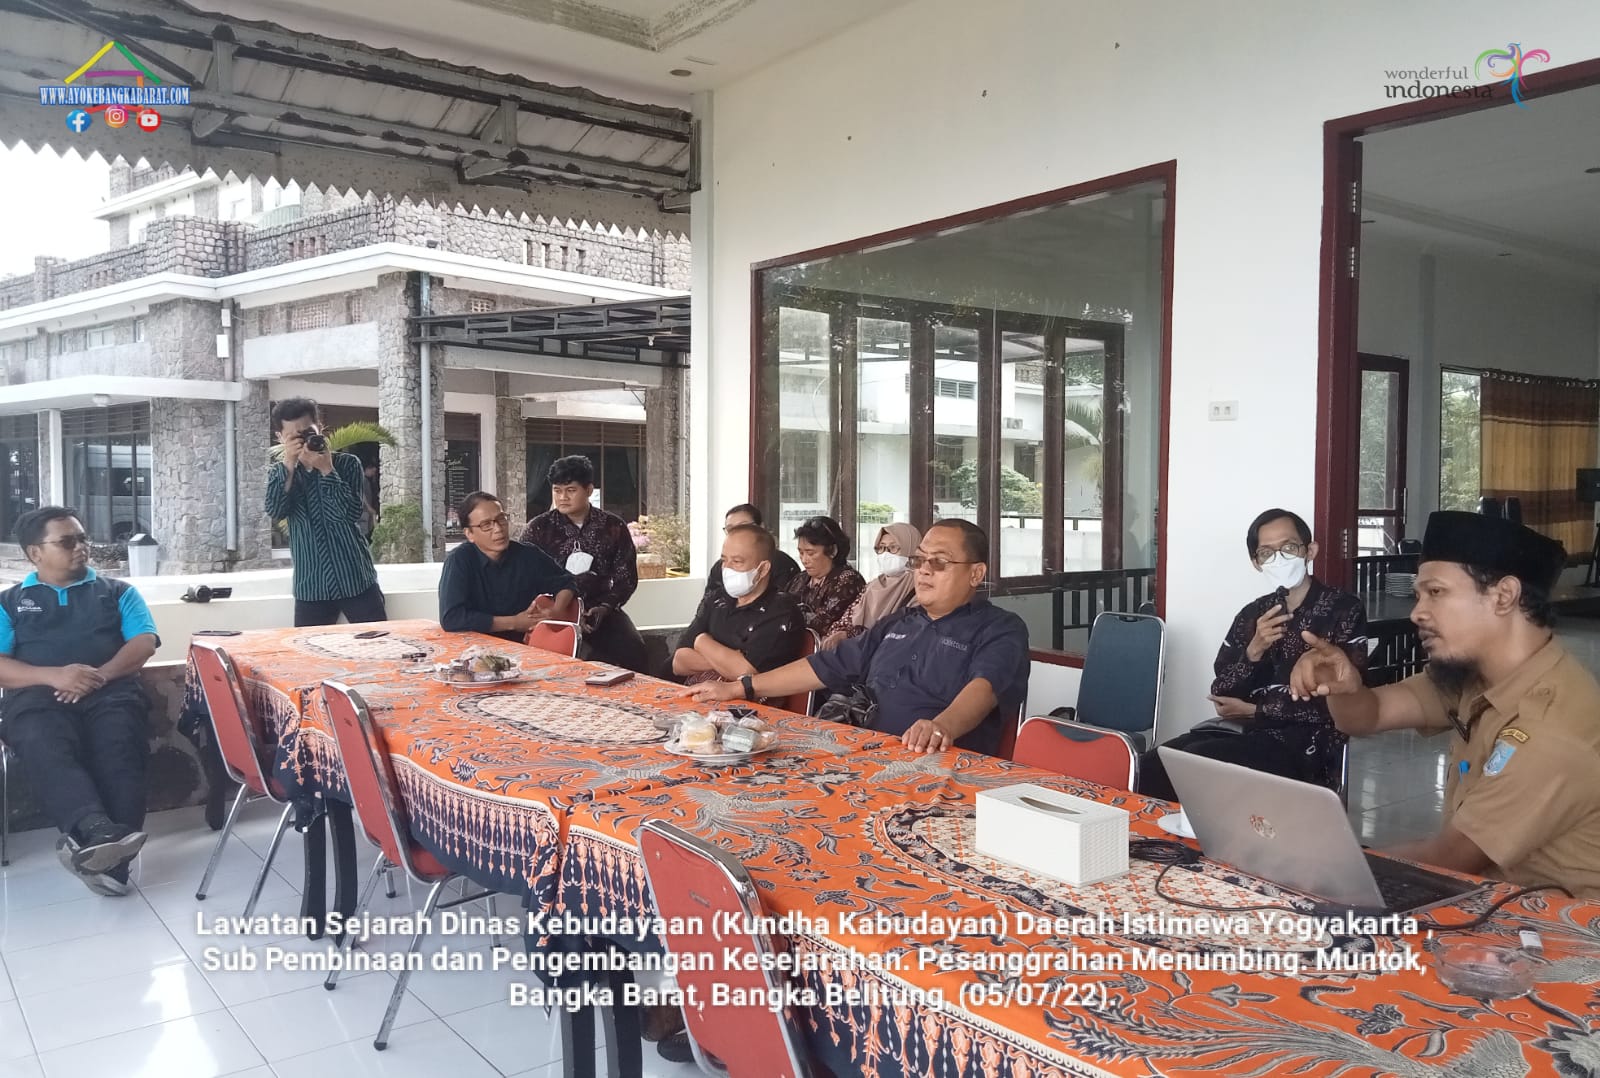 Dinas Kebudayaan (Kundha Kabudayan) Daerah Istimewa Yogyakarta, melalui Sub Pembinaan dan Pengembangan Kesejarahan